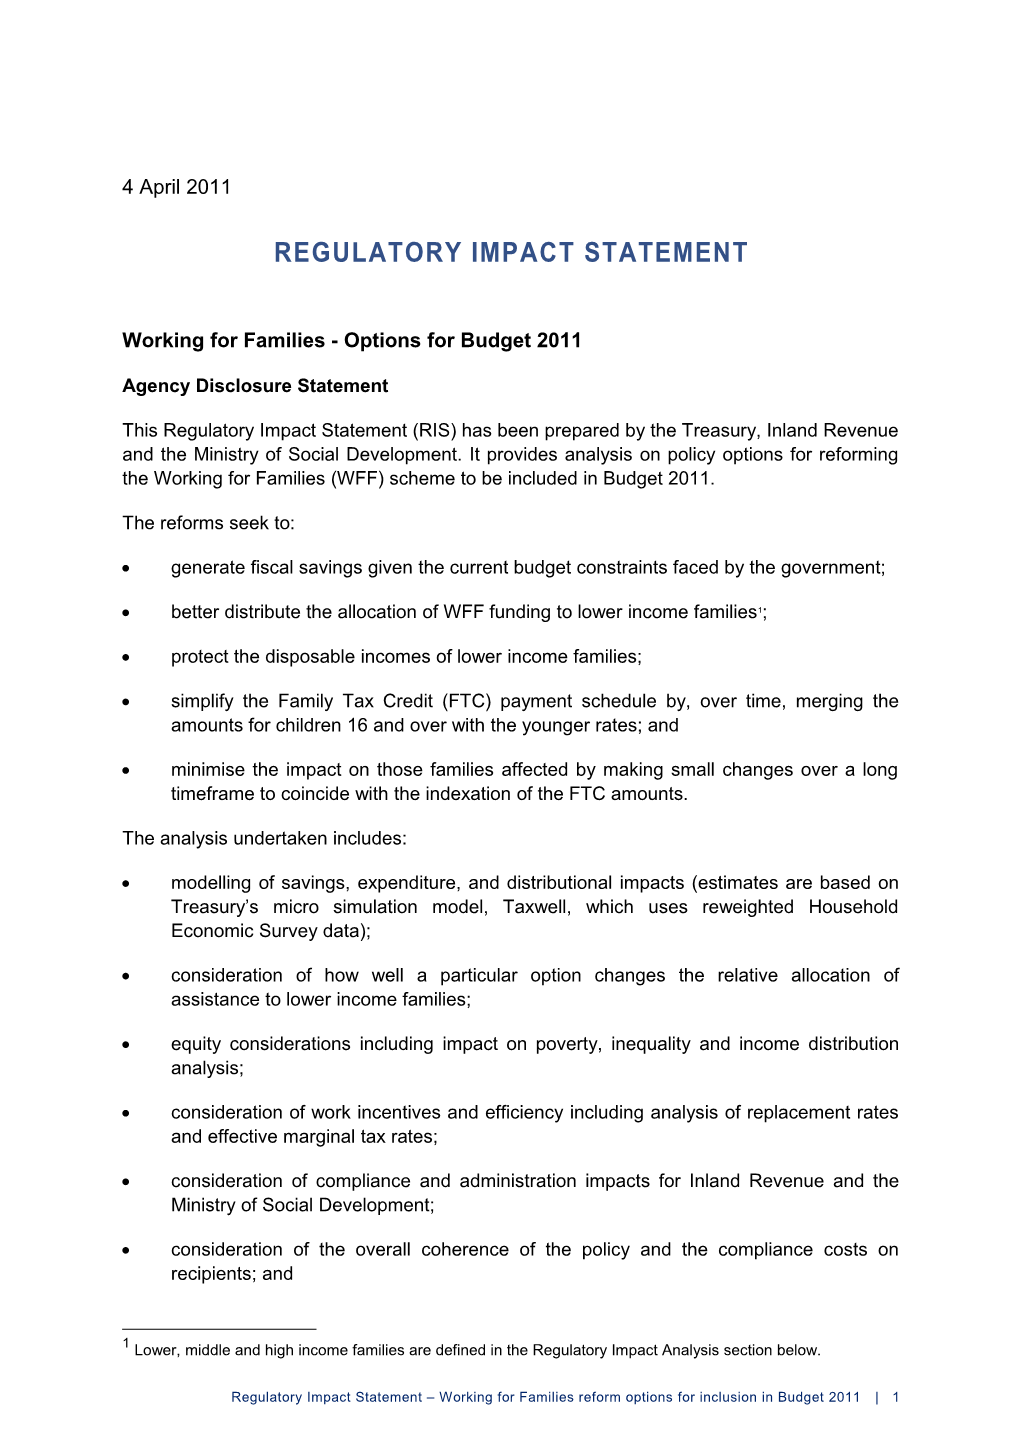 Budget 2011: Regulatory Impact Statement